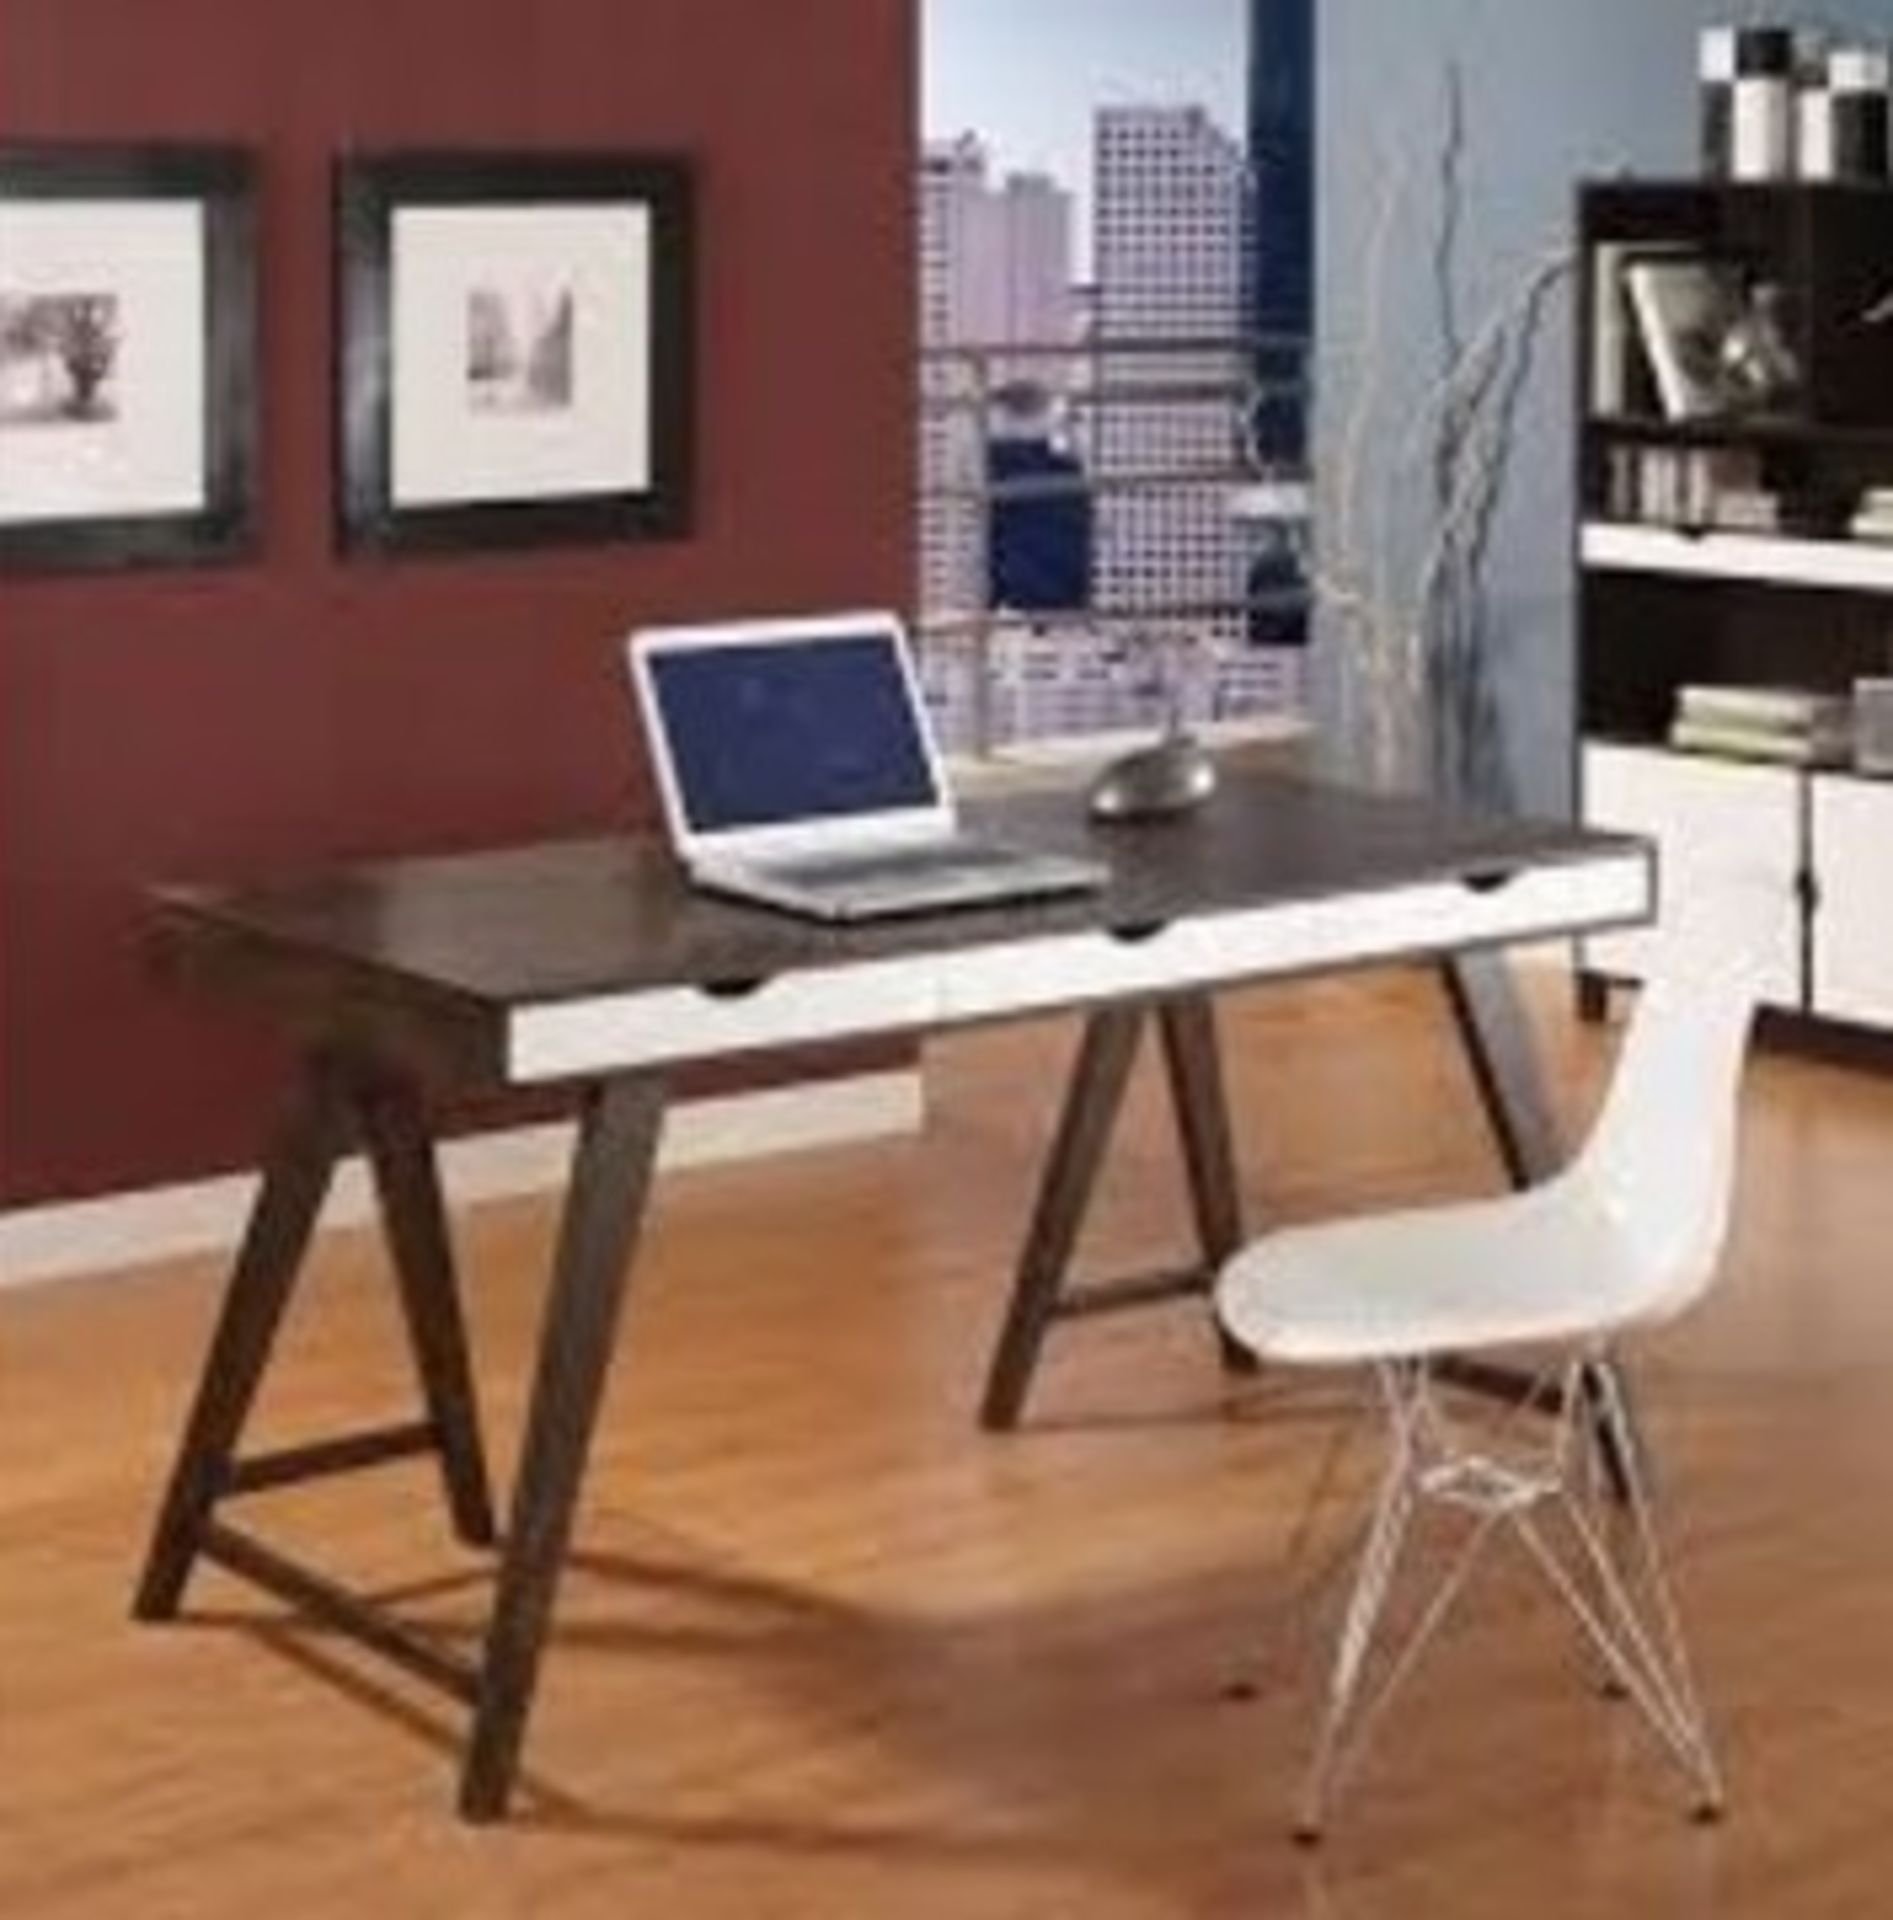 1 x Blue Suntree Ellwood Trestle Desk With a Dark Walnut Finish - RRP £280.00! - Image 3 of 3